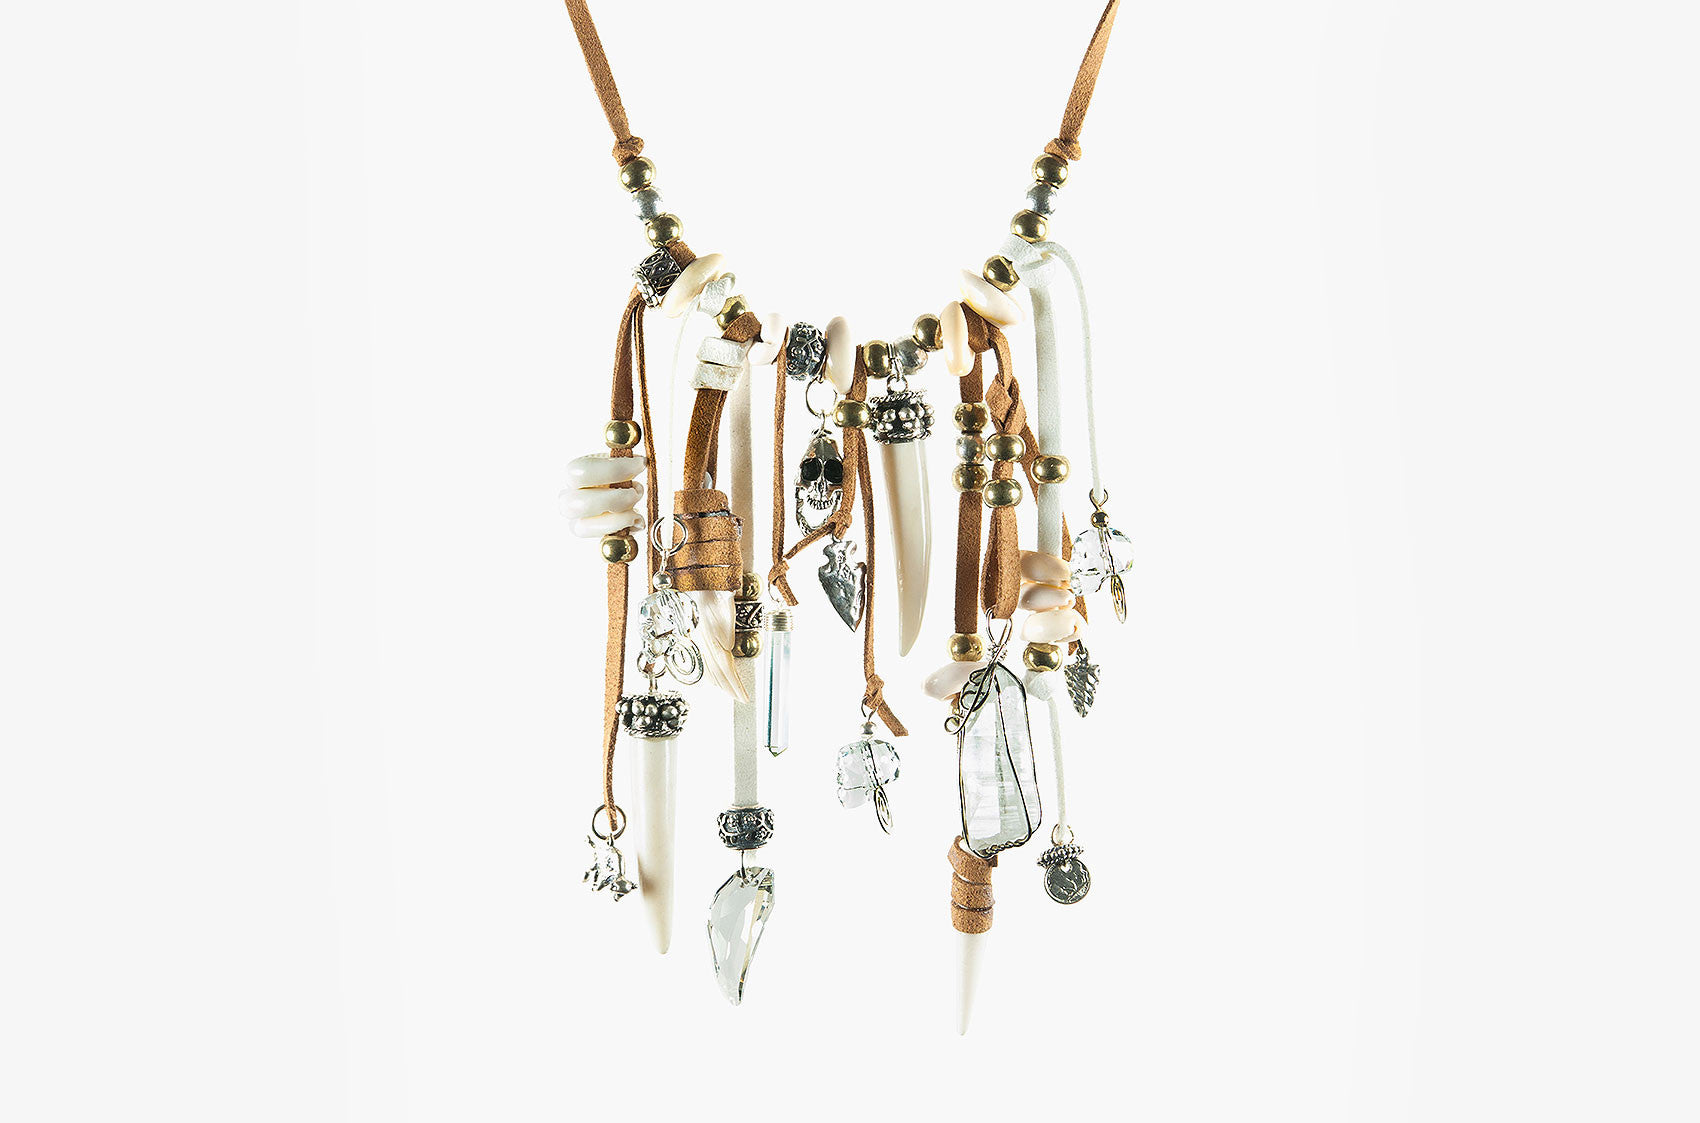 Prairie Princess ornate necklace in tan